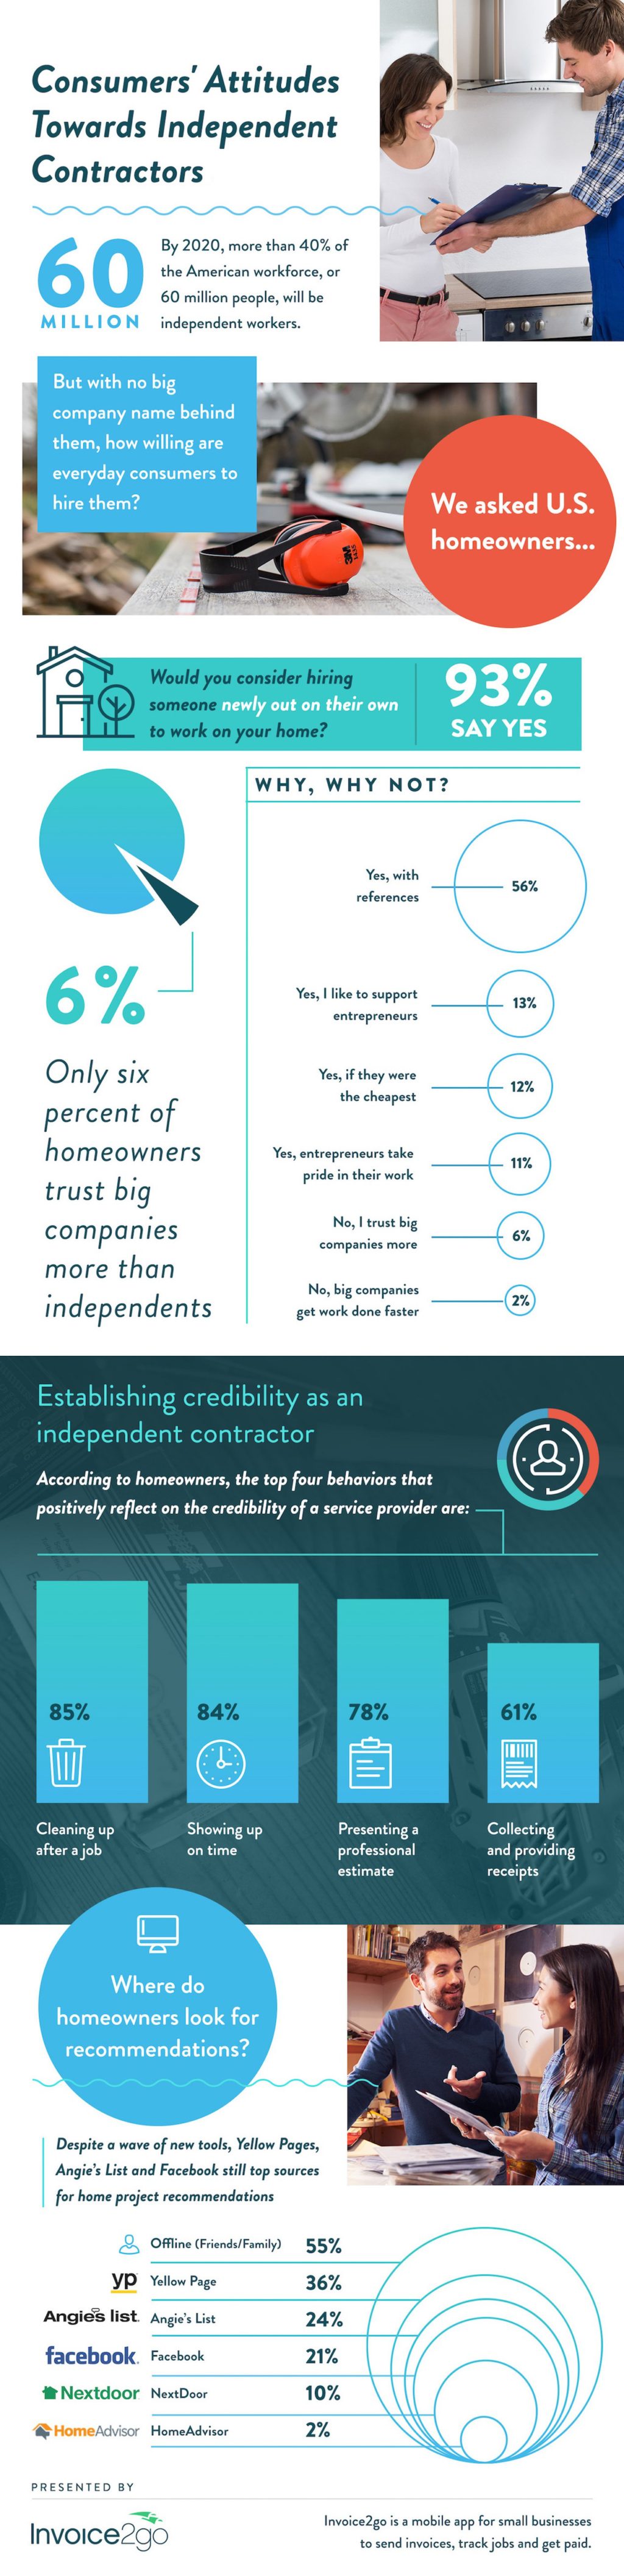 contractors-consumer-attitudes-infographic